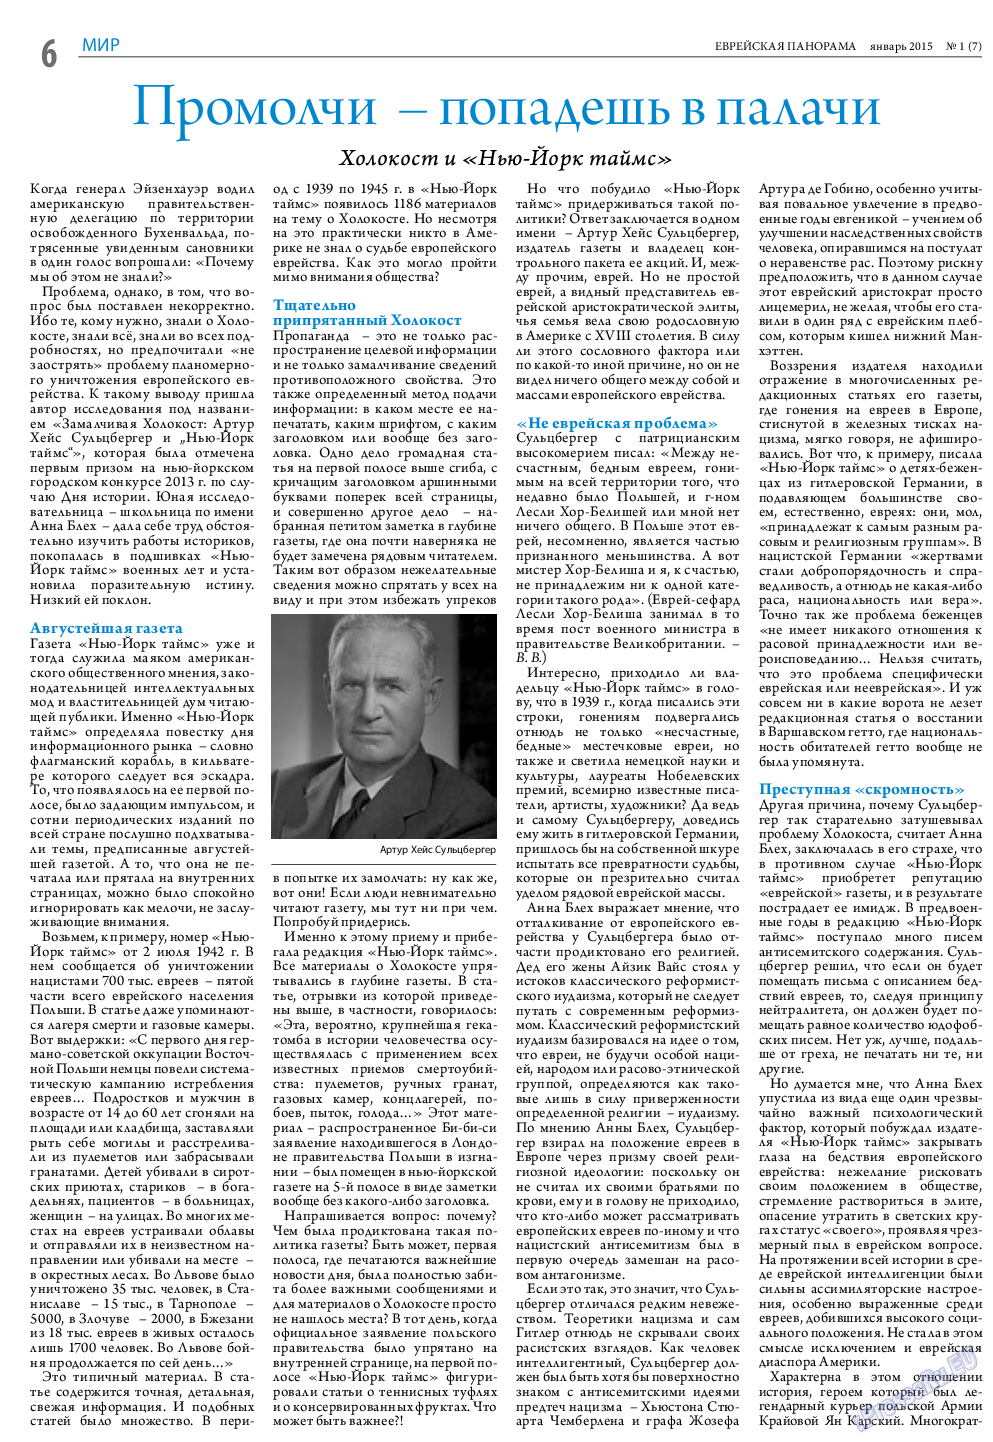 Еврейская панорама, газета. 2015 №1 стр.6